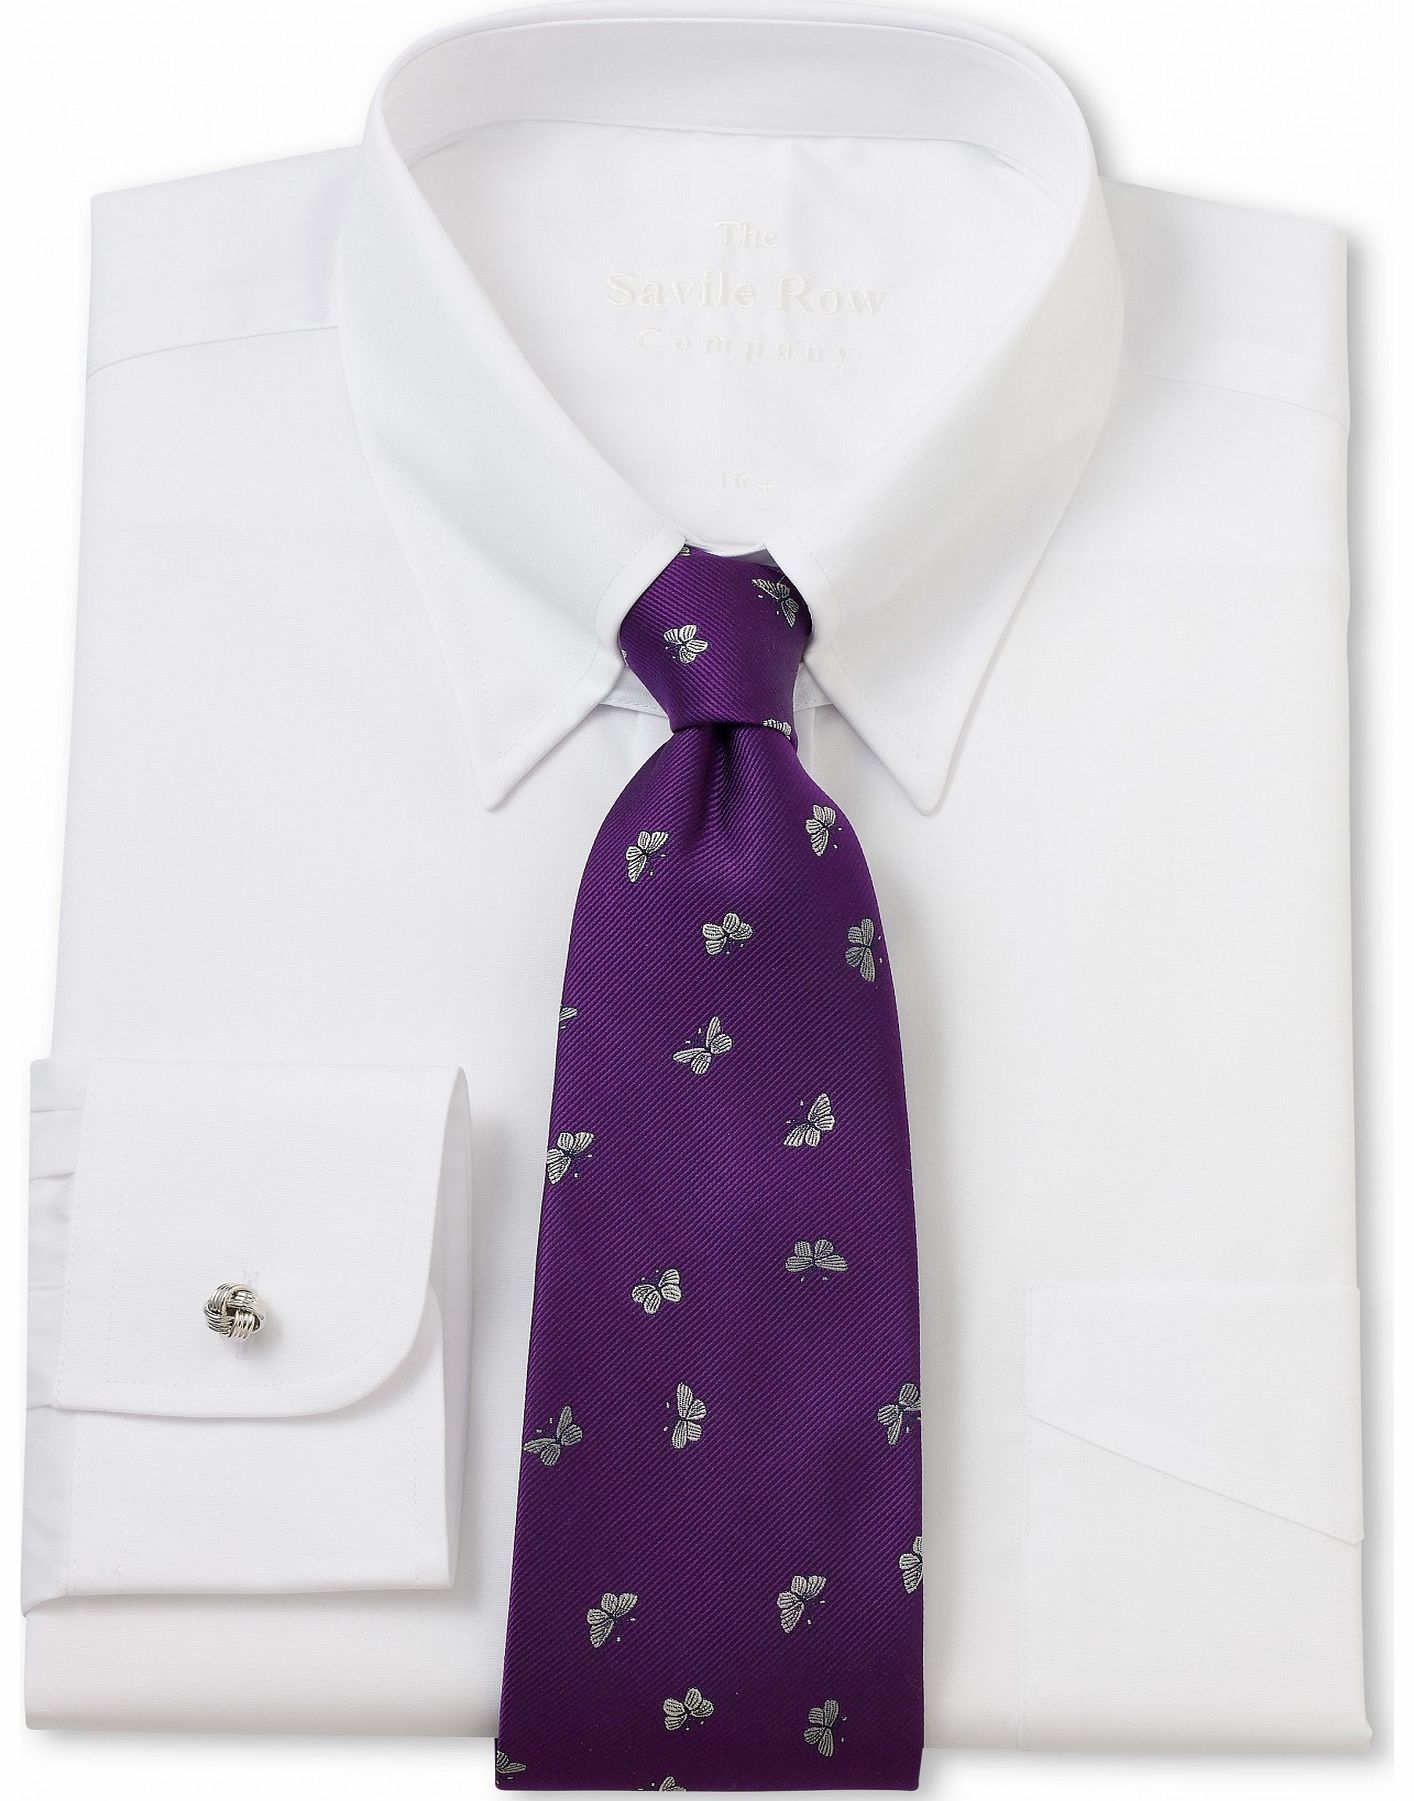 Savile Row Company White Poplin Tab Collar Classic Fit Shirt 17